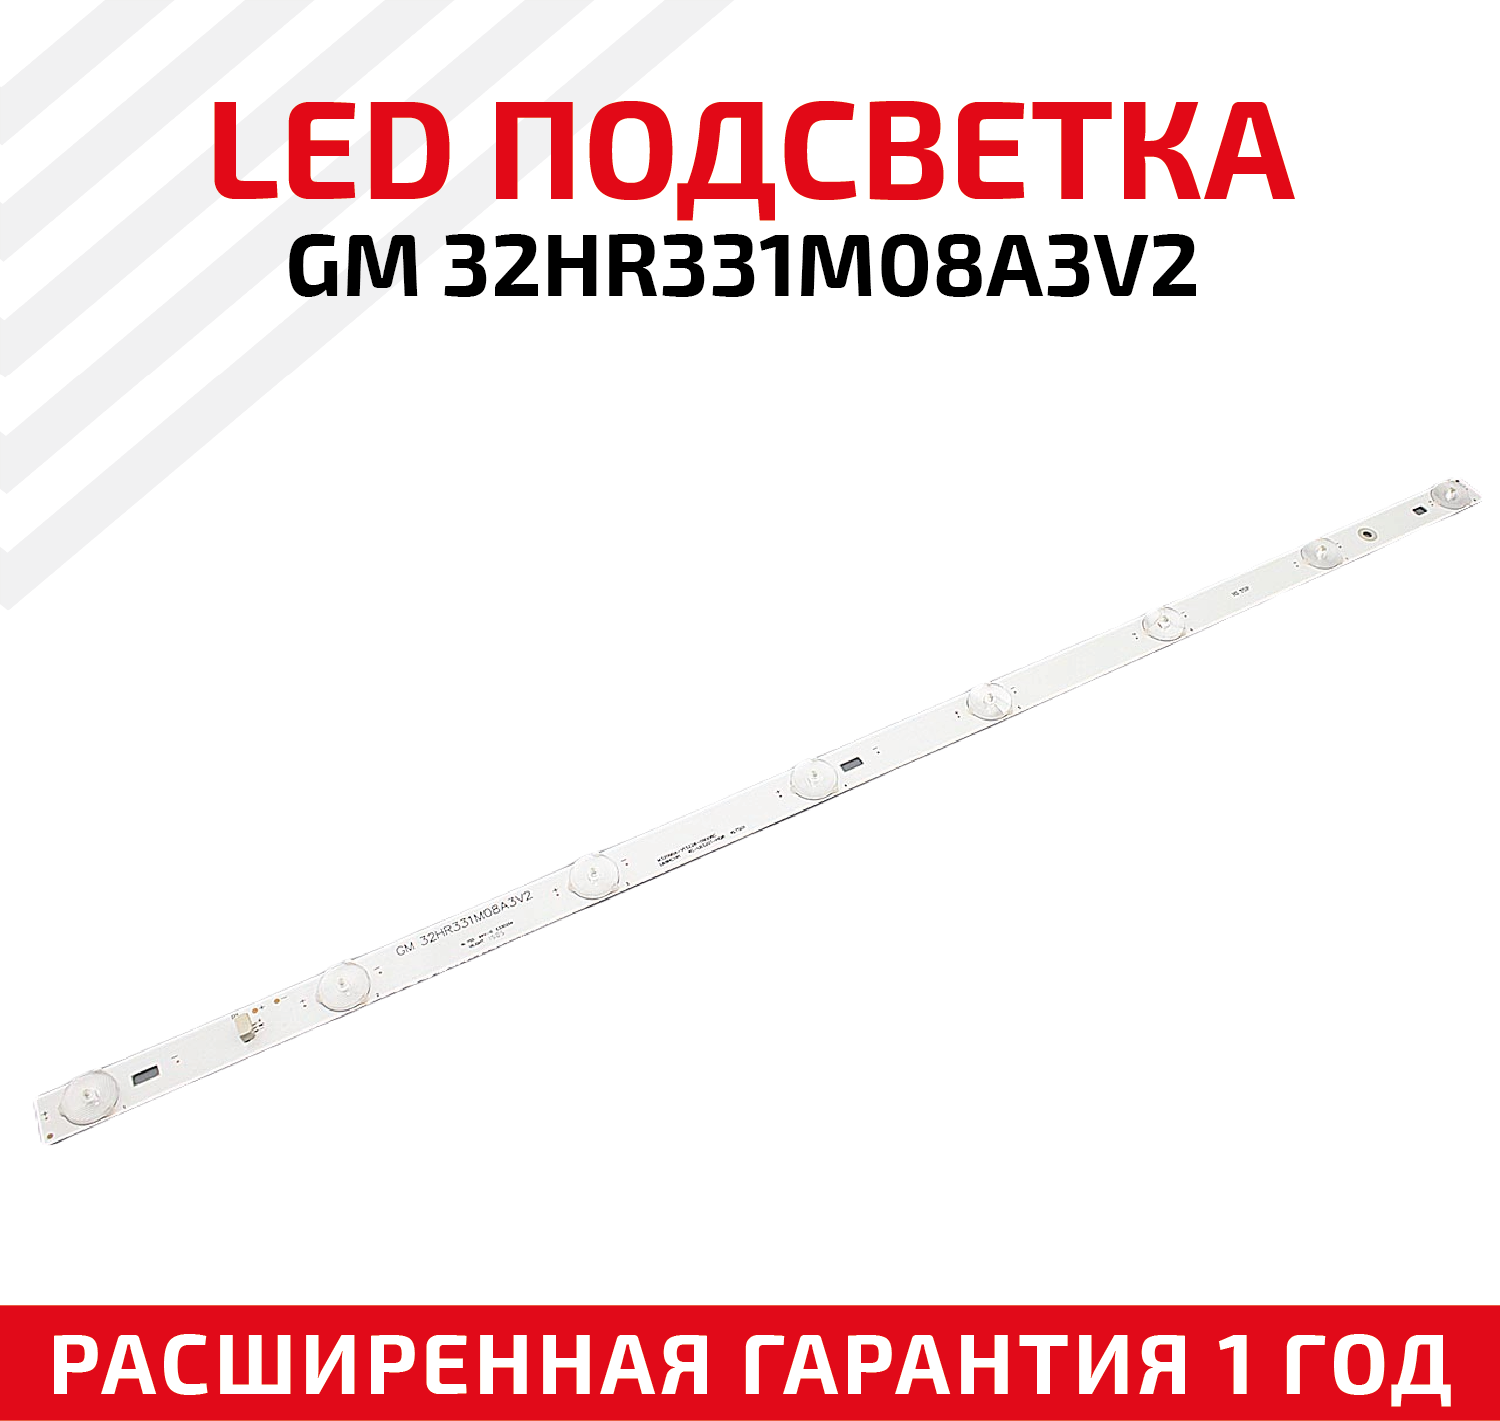 LED подсветка (светодиодная планка) для телевизора GM 32HR331M08A3V2